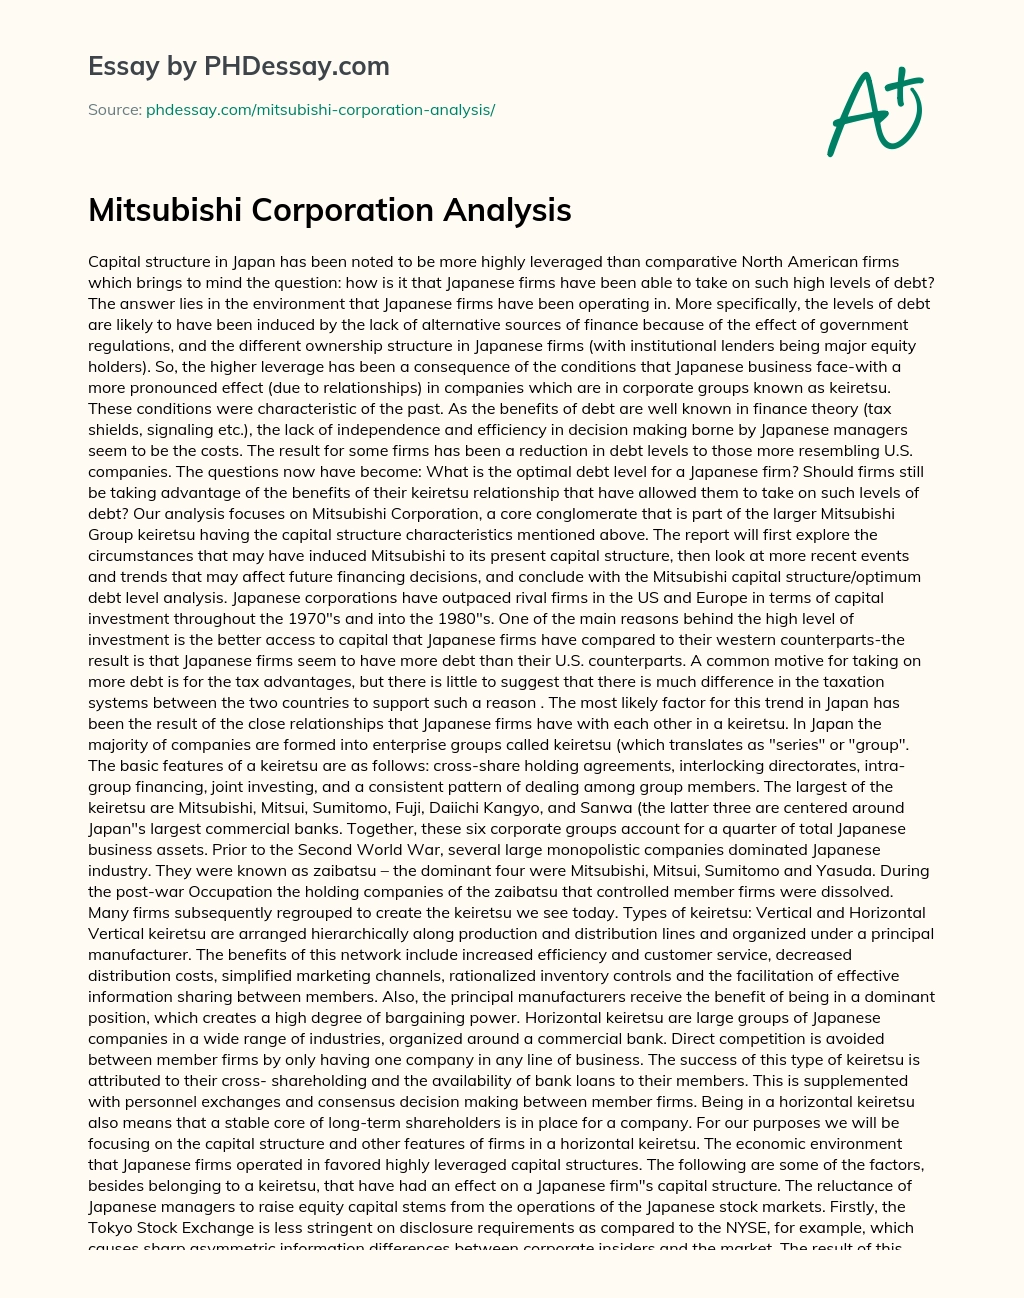 Mitsubishi Corporation Analysis essay